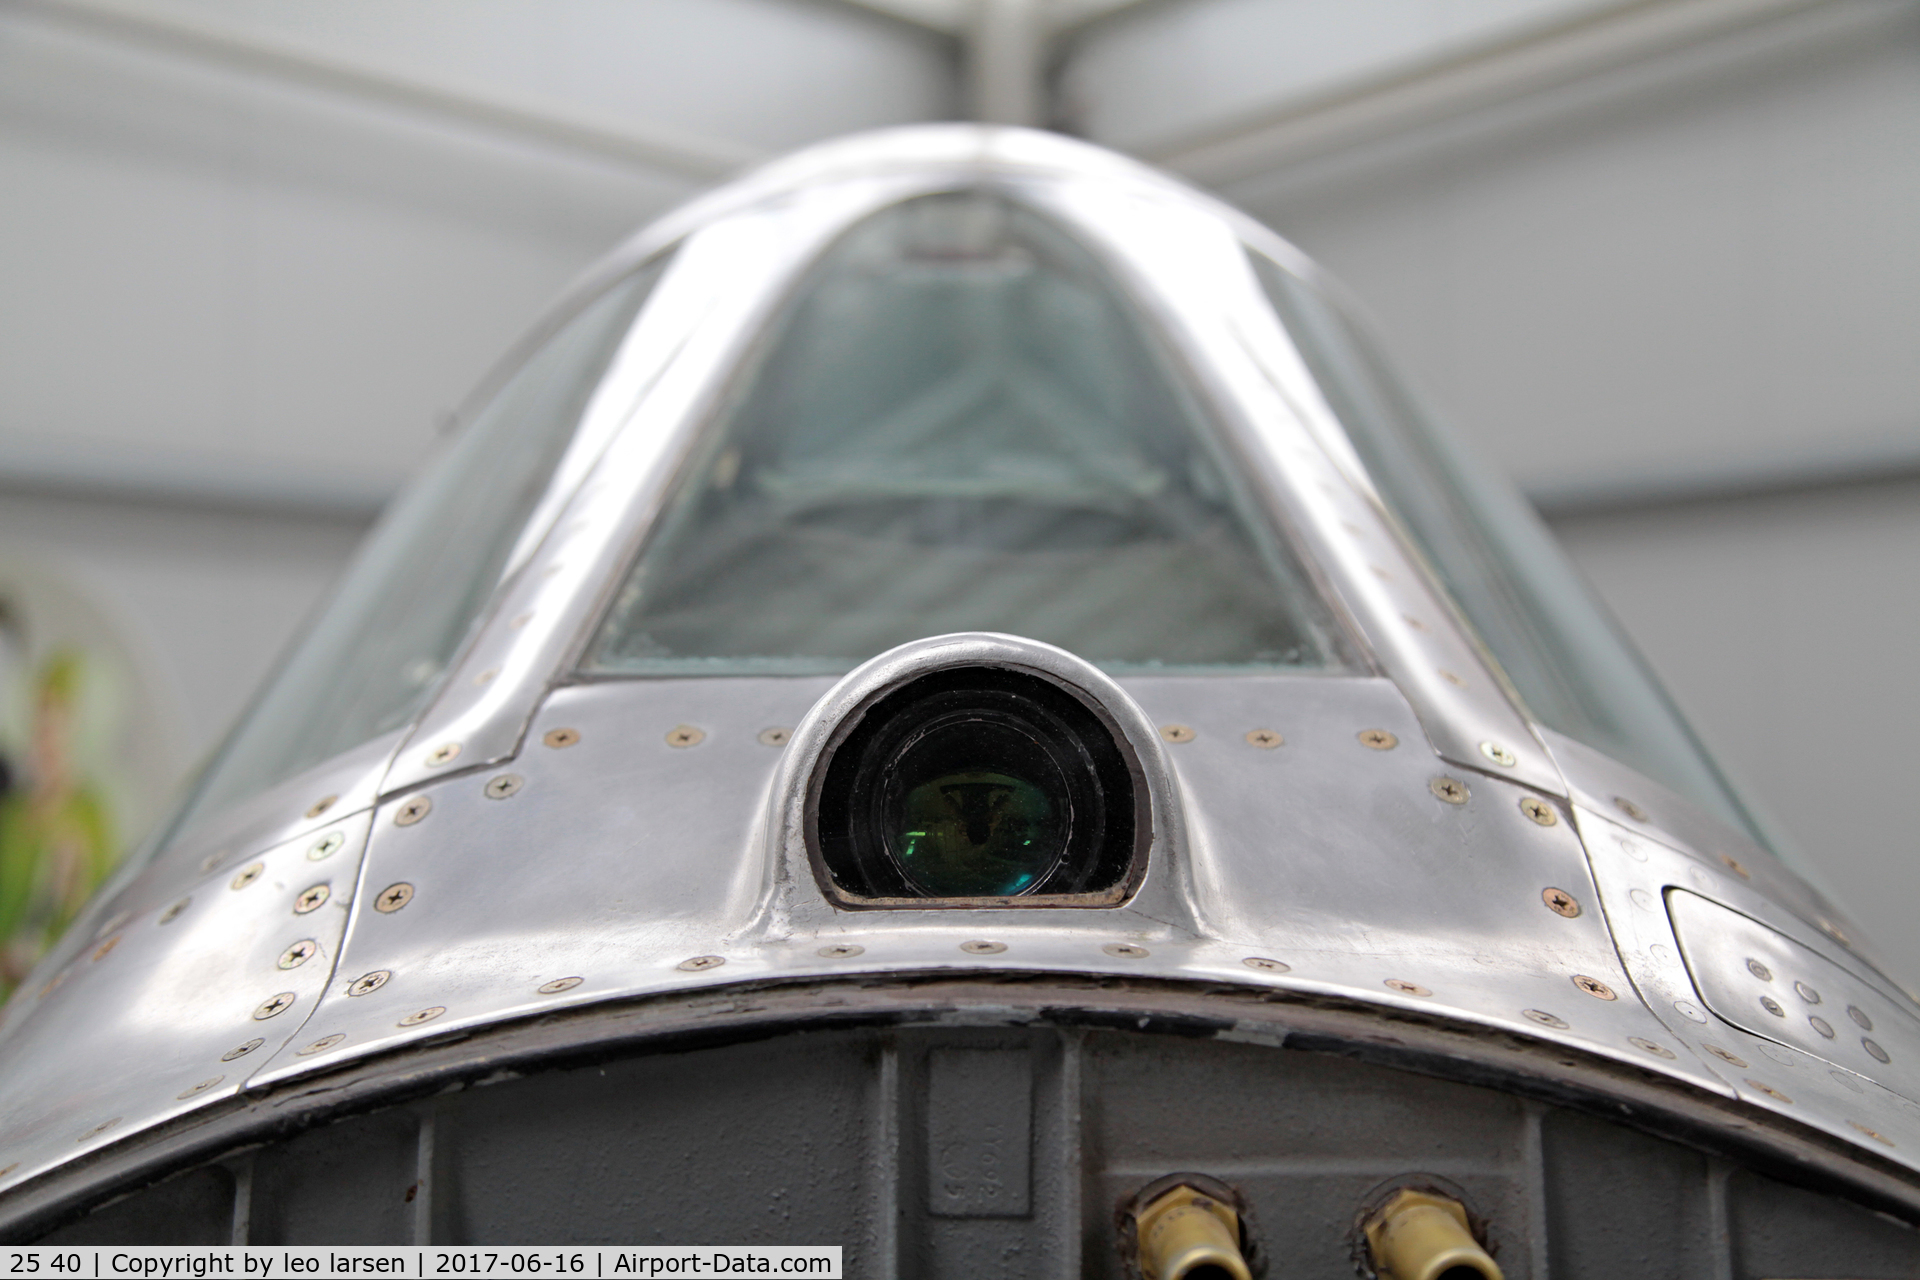 25 40, Lockheed F-104G Starfighter C/N 683-8327, Wernigerode Technik Museum 16.6.2017

Gun Camera